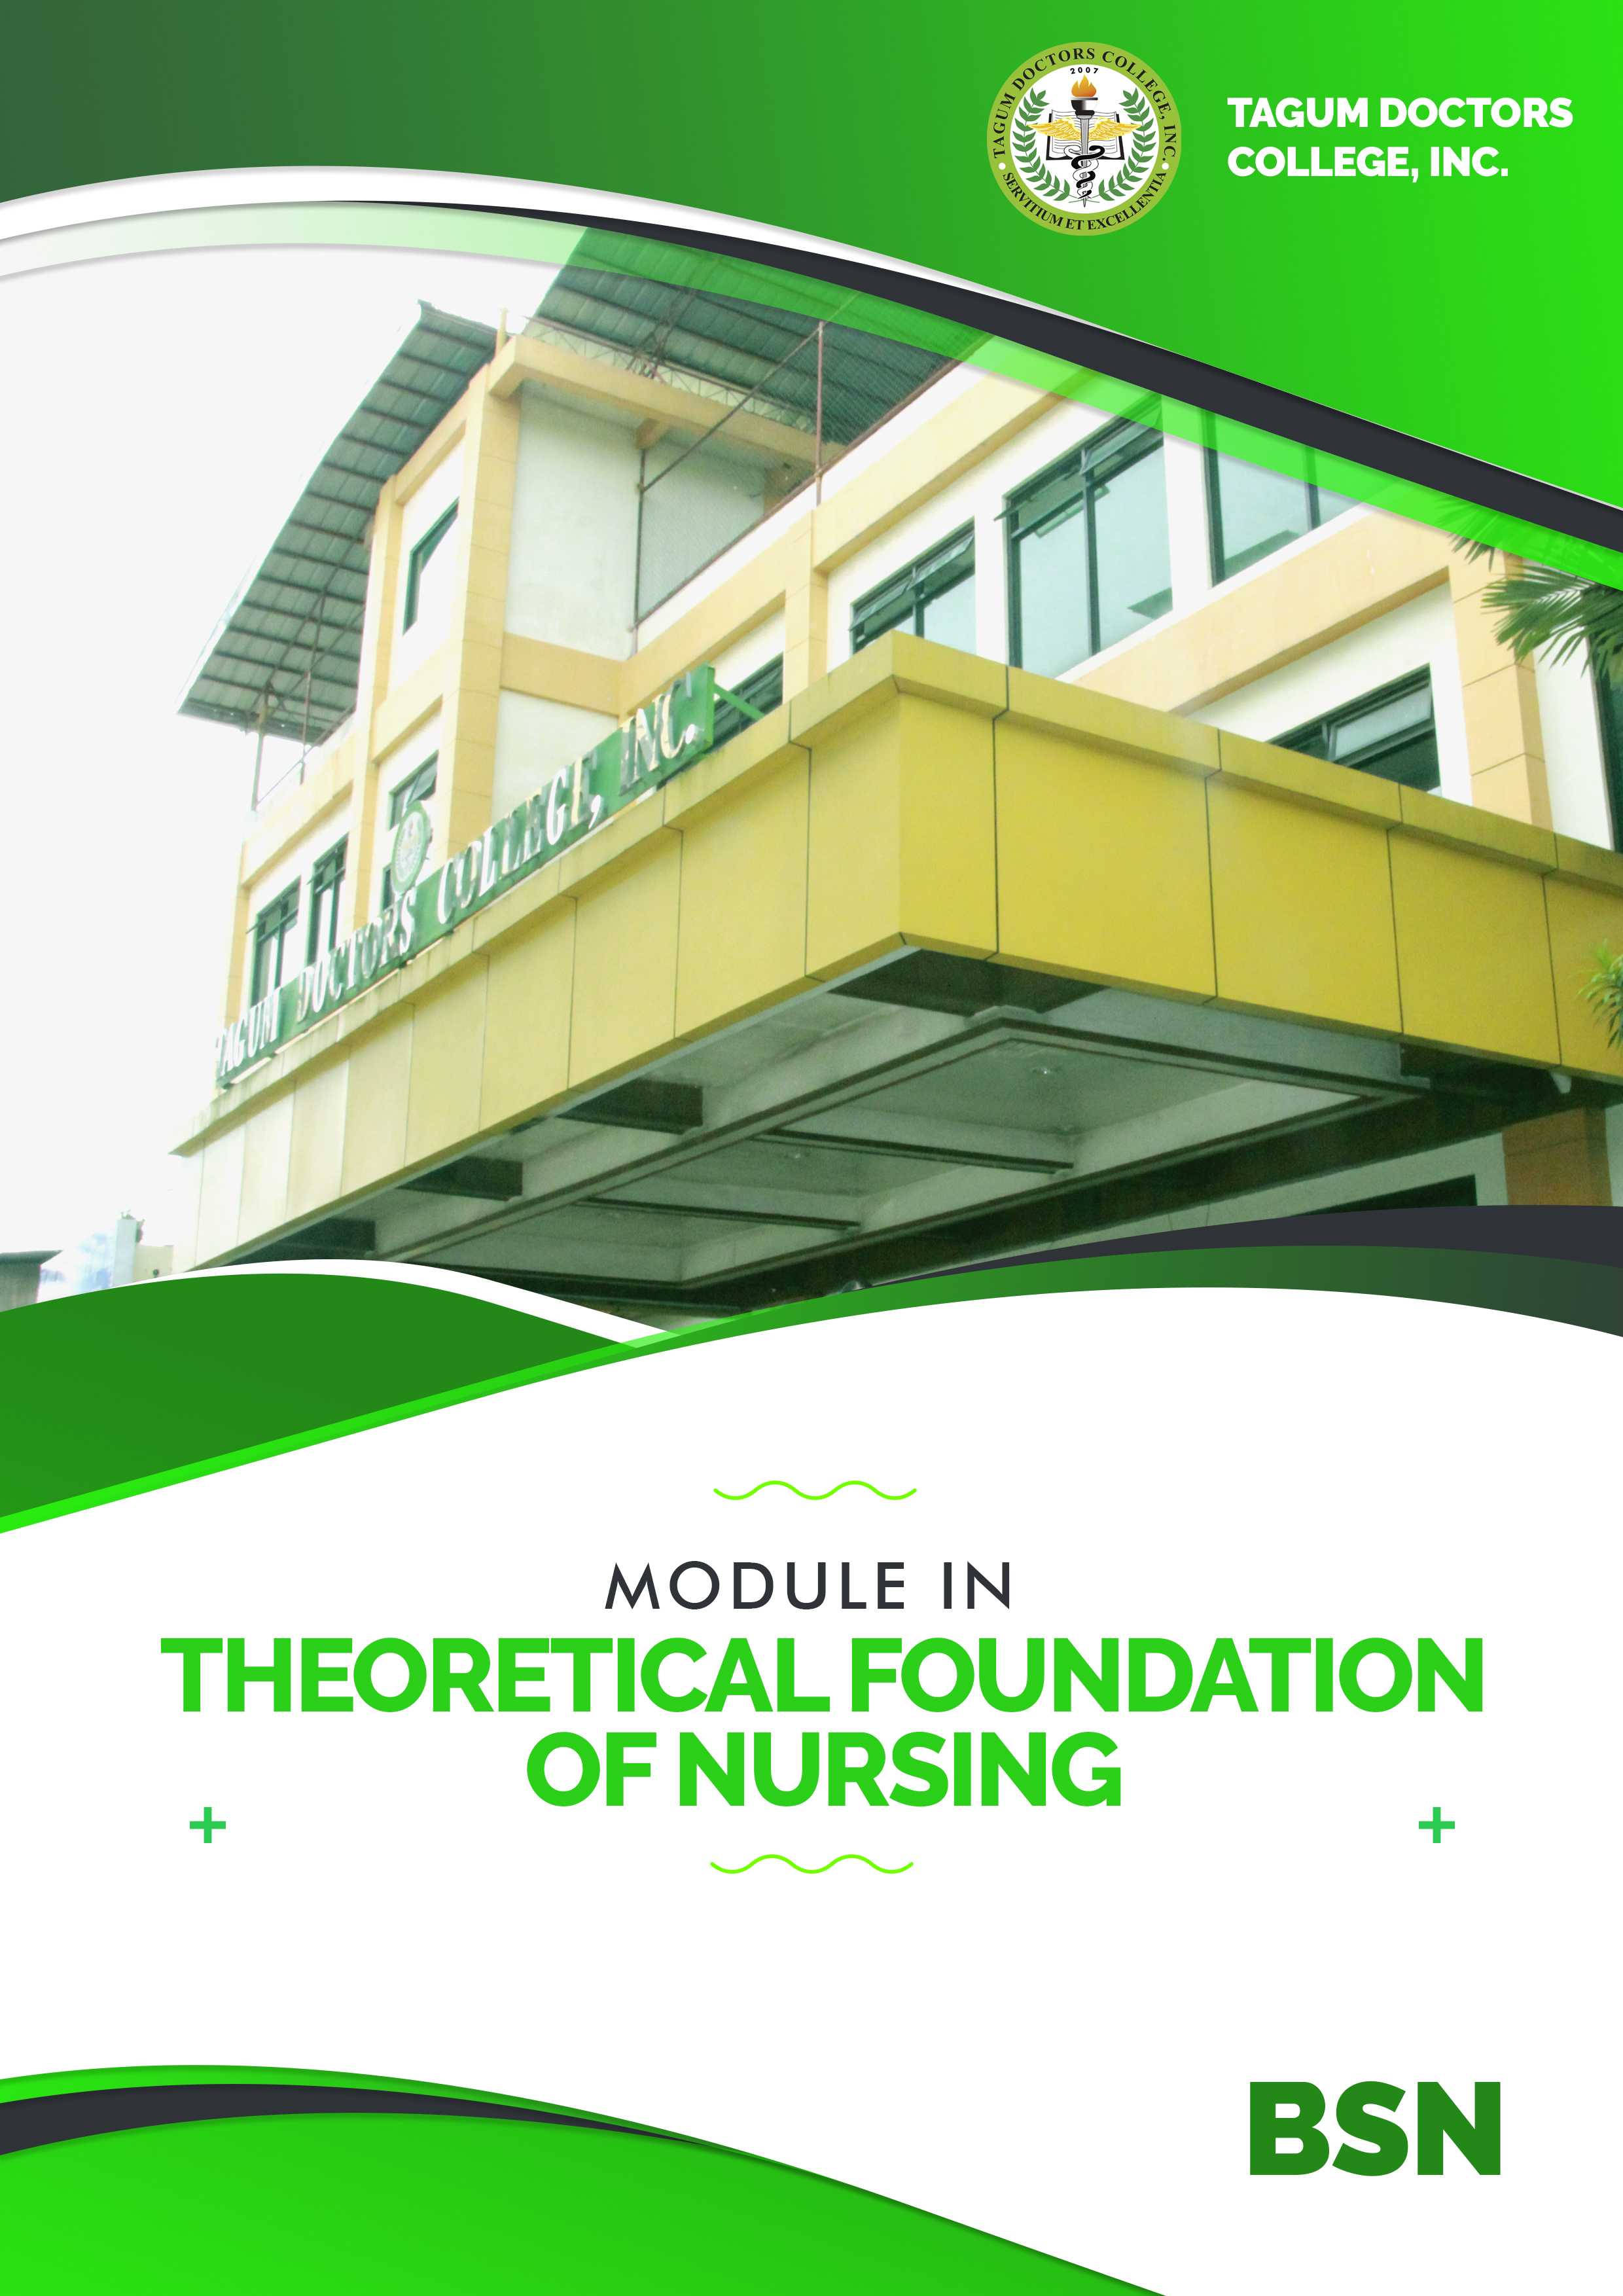 Theoretical Foundations of Nursing - BSN 1-F